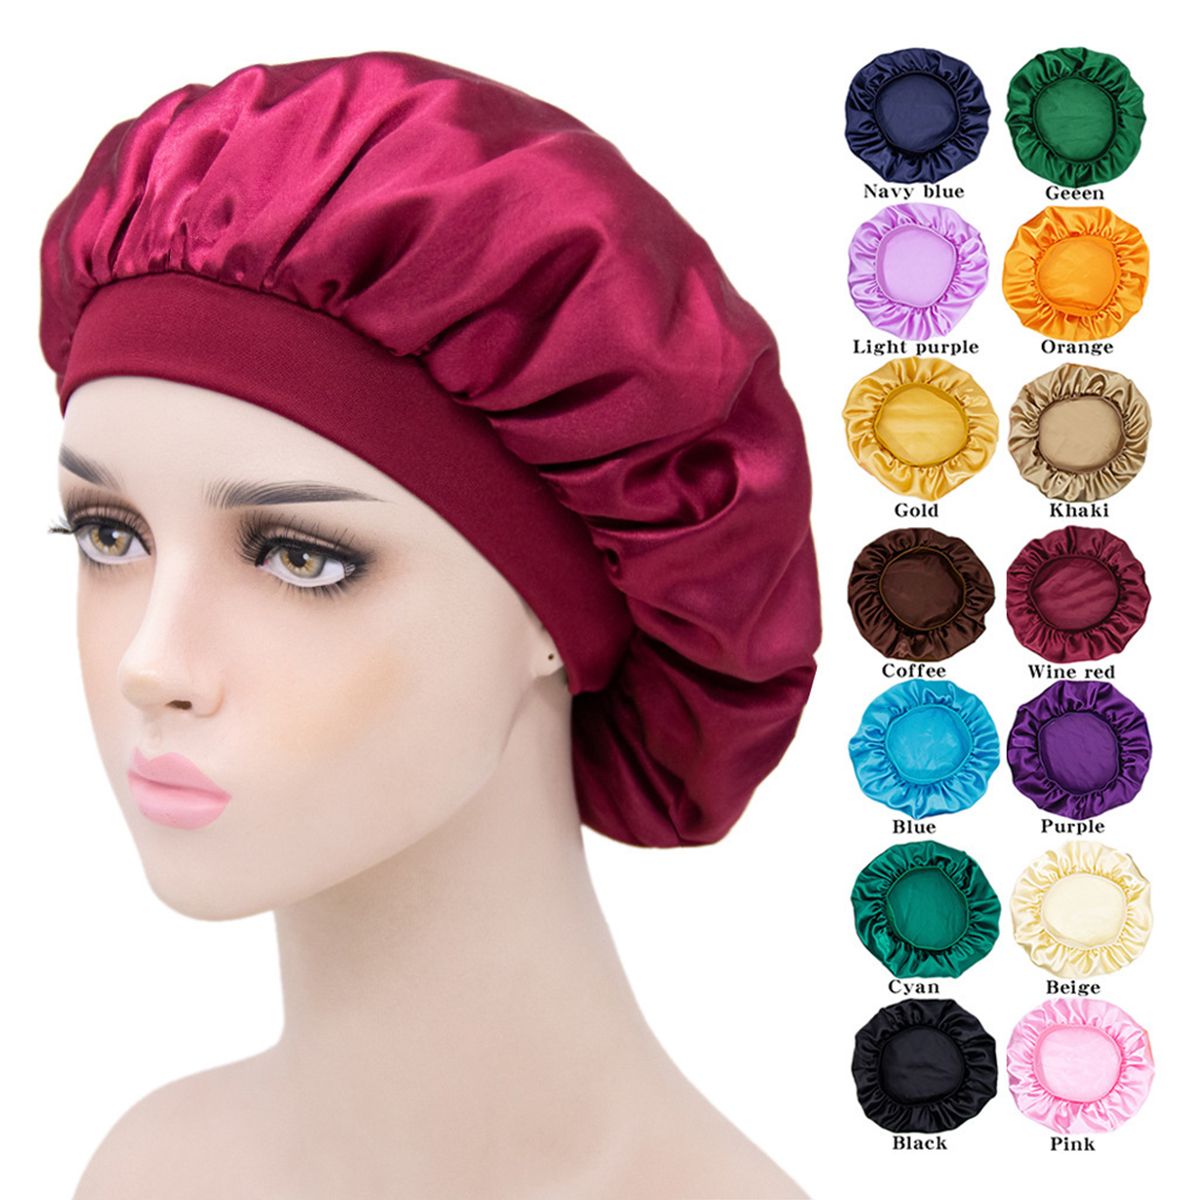 Silk Bonnet for Hair Care